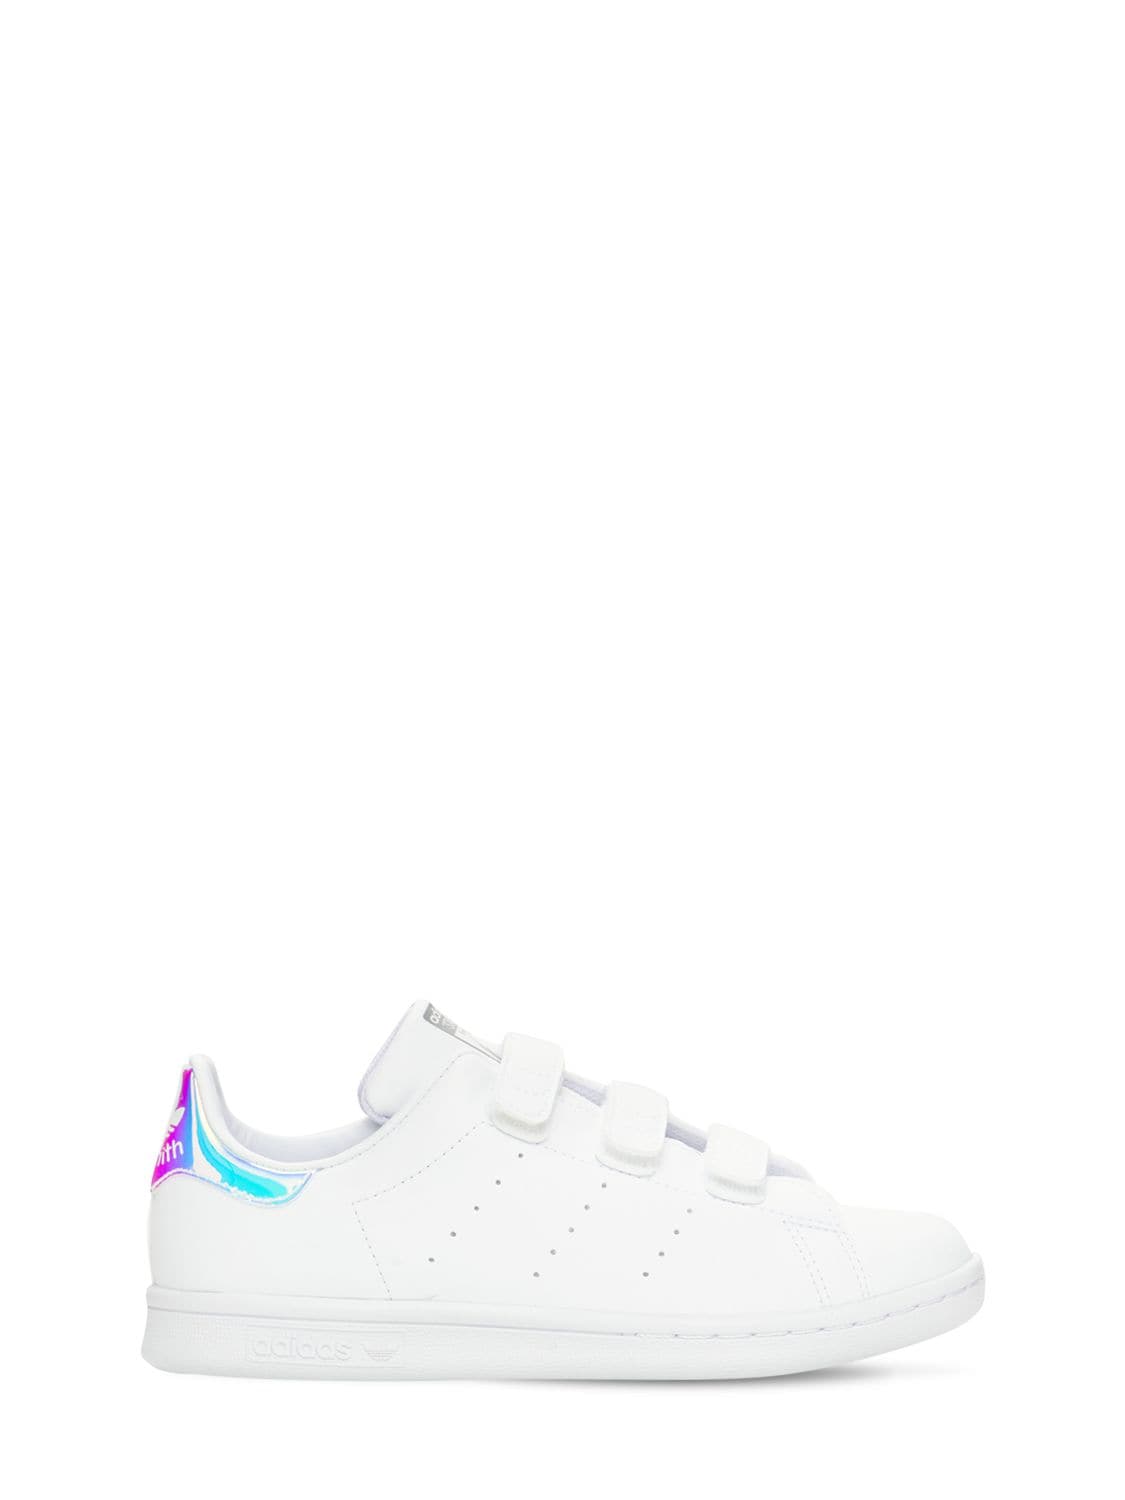 Adidas Originals Kids' Stan Smith Strap Sneakers In White